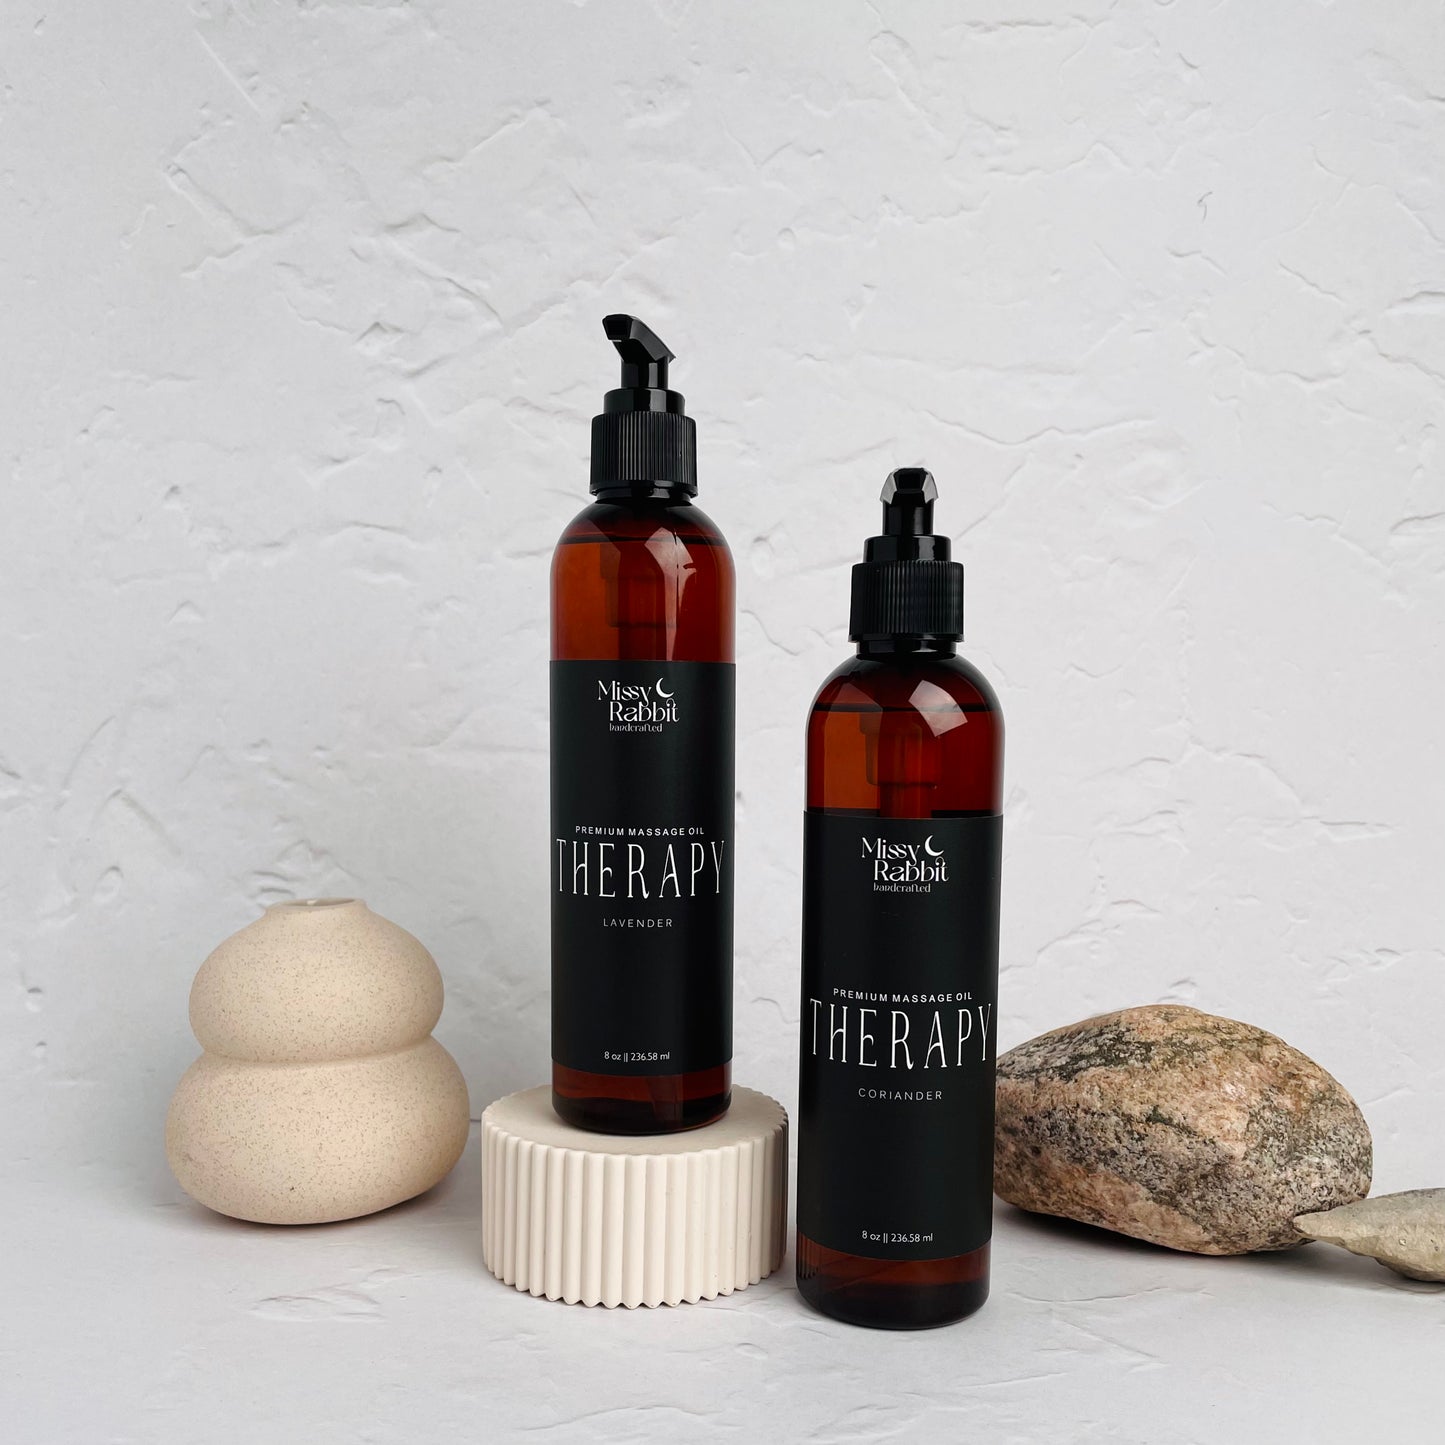 THERAPY Premium Massage Body Oil with Pure Essential Oils